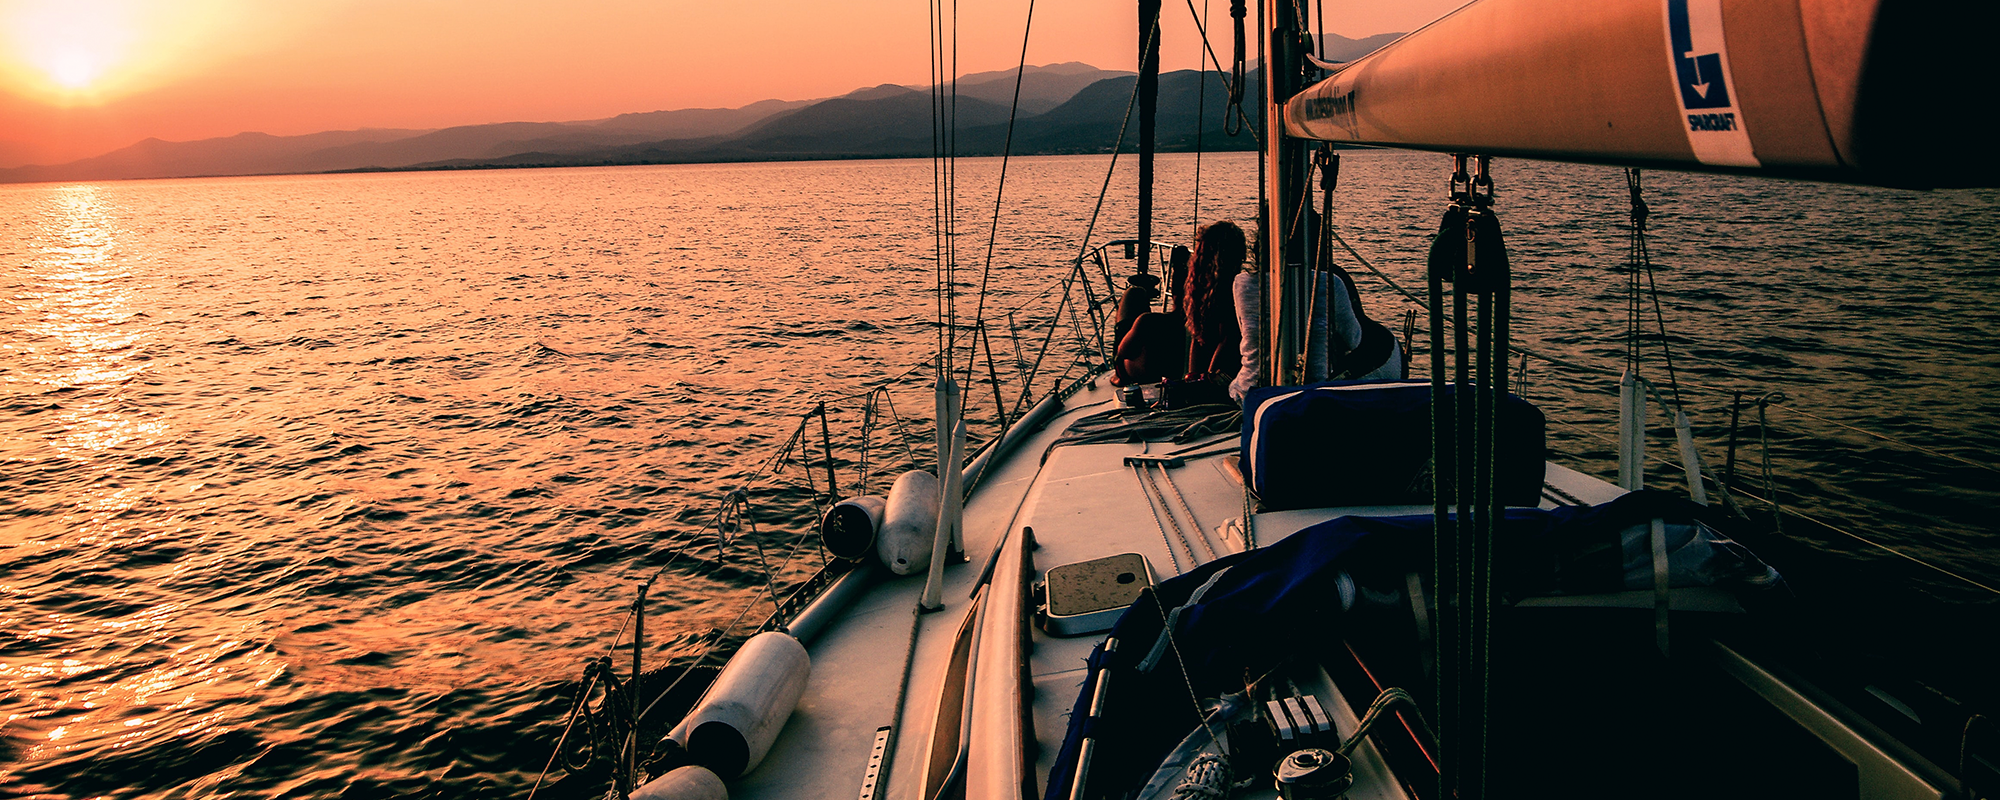 Sailboat Sailing in Sunset